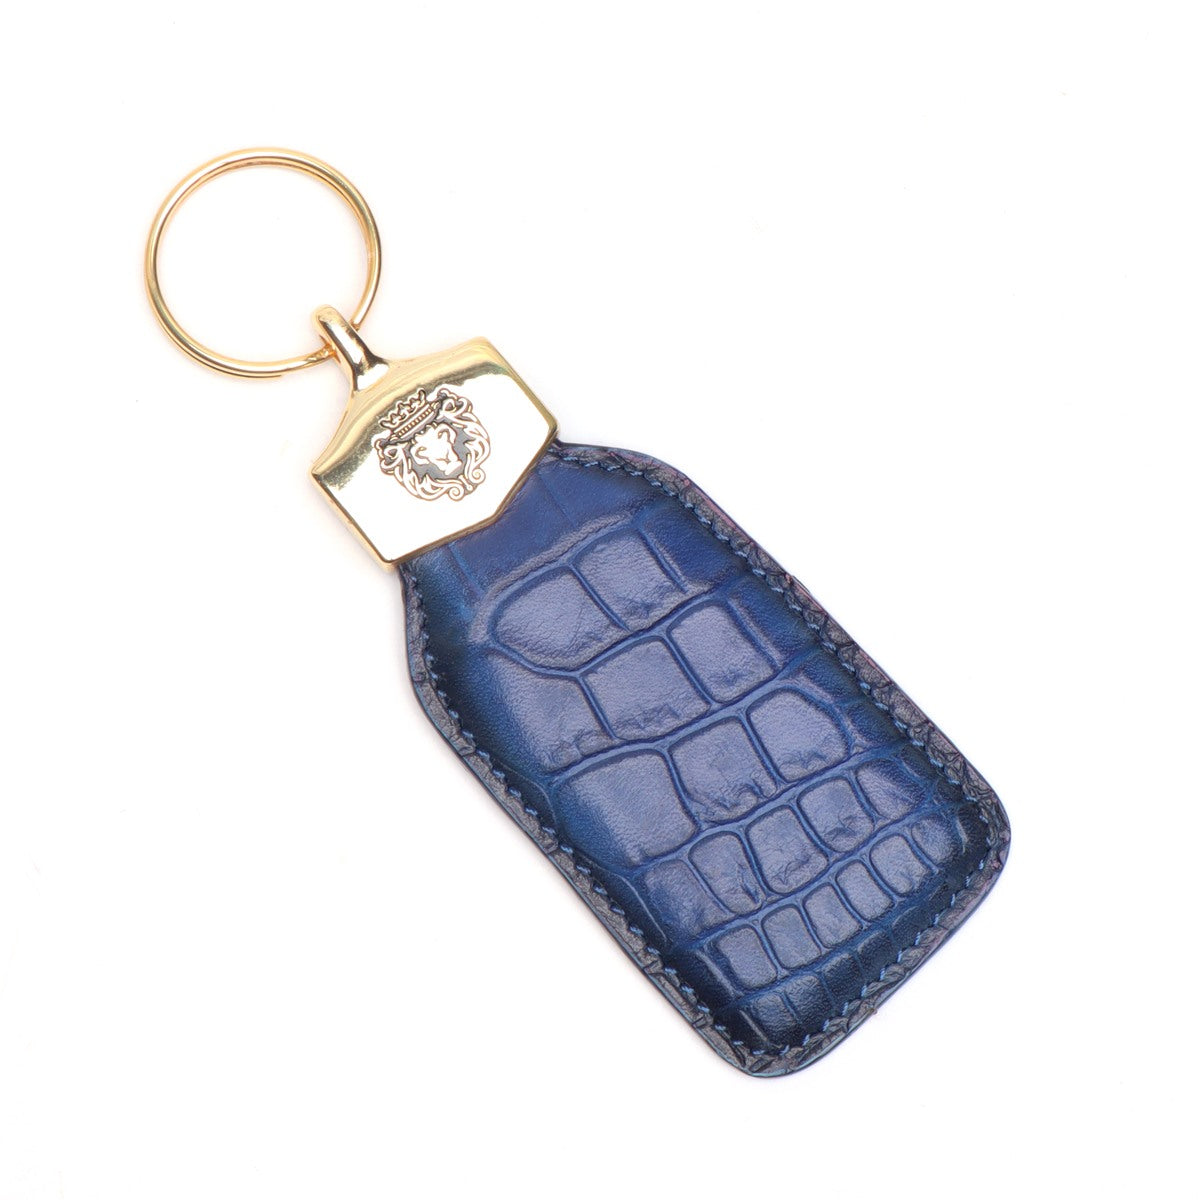 Blue Croco Print Leather With Golden Lion Logo Keychain By Brune & Bareskin